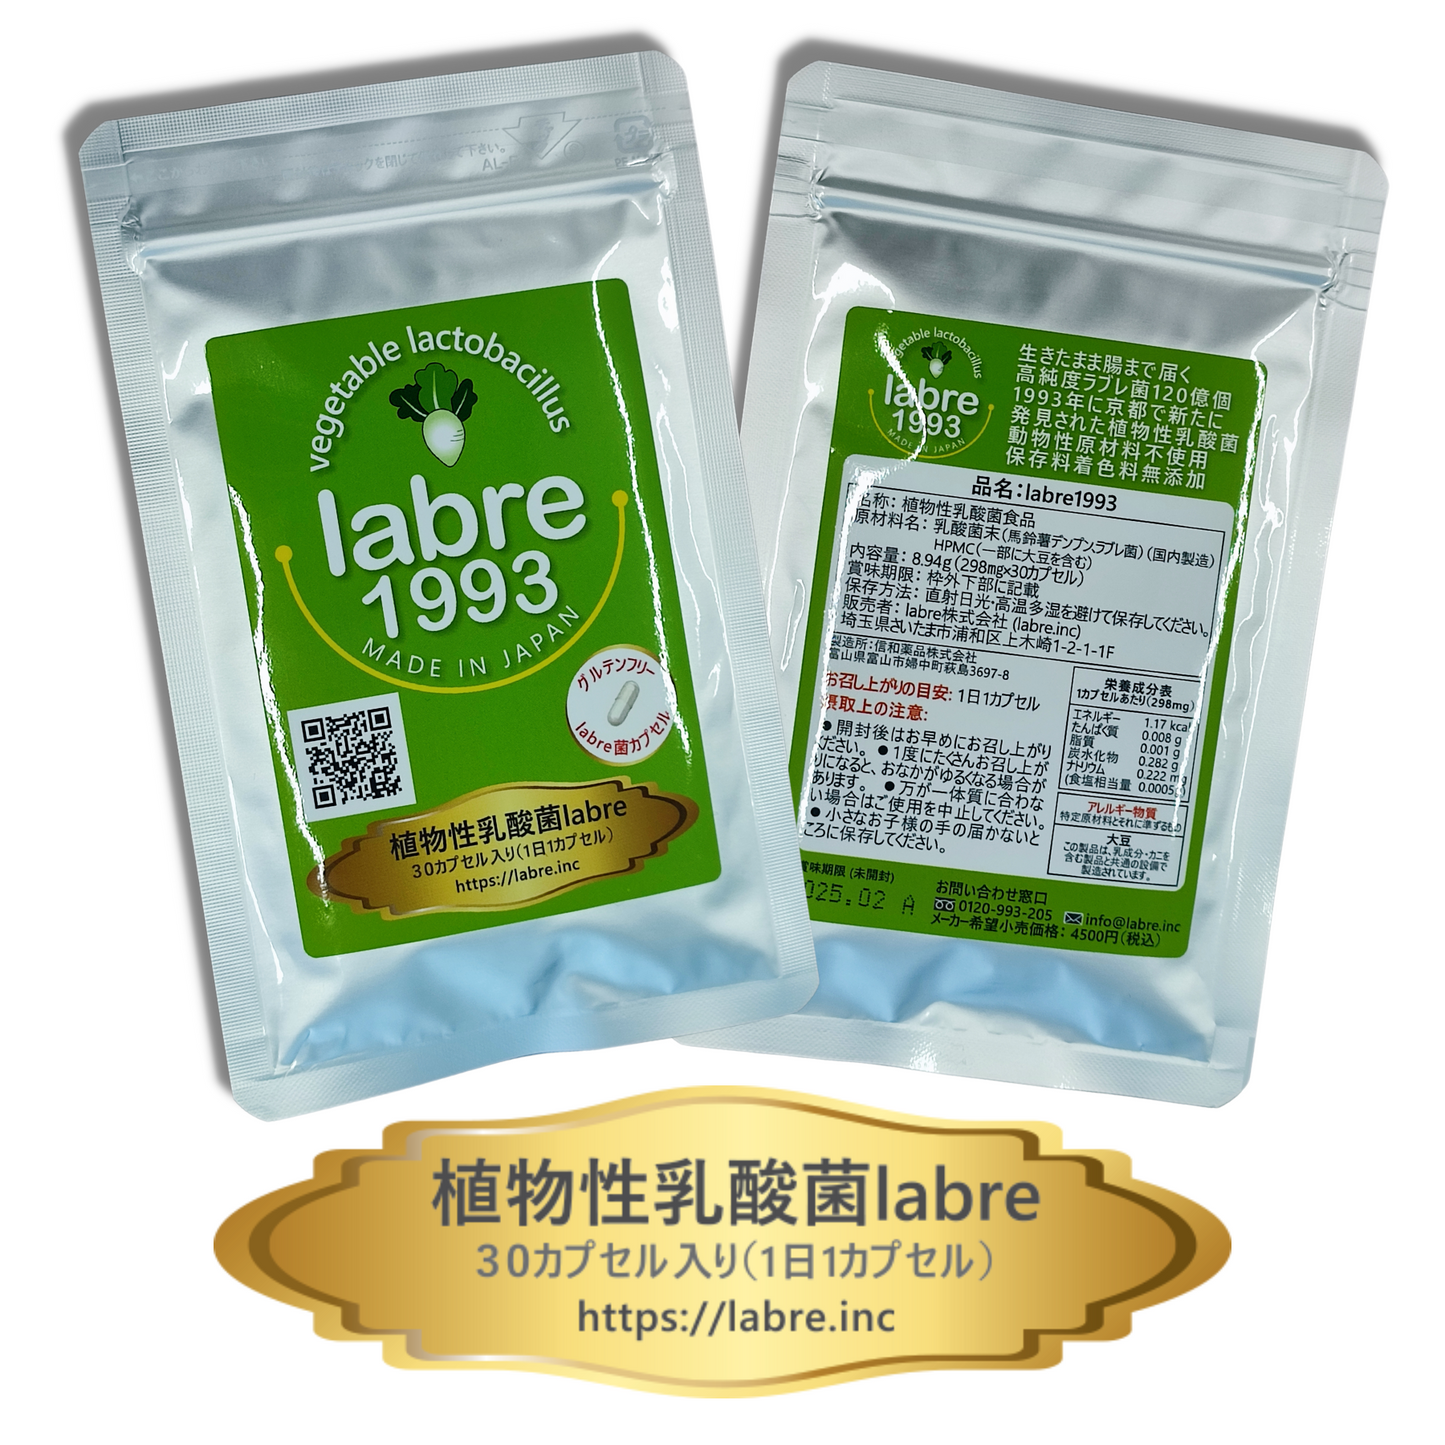 Plant-based lactic acid bacteria Food labre1993